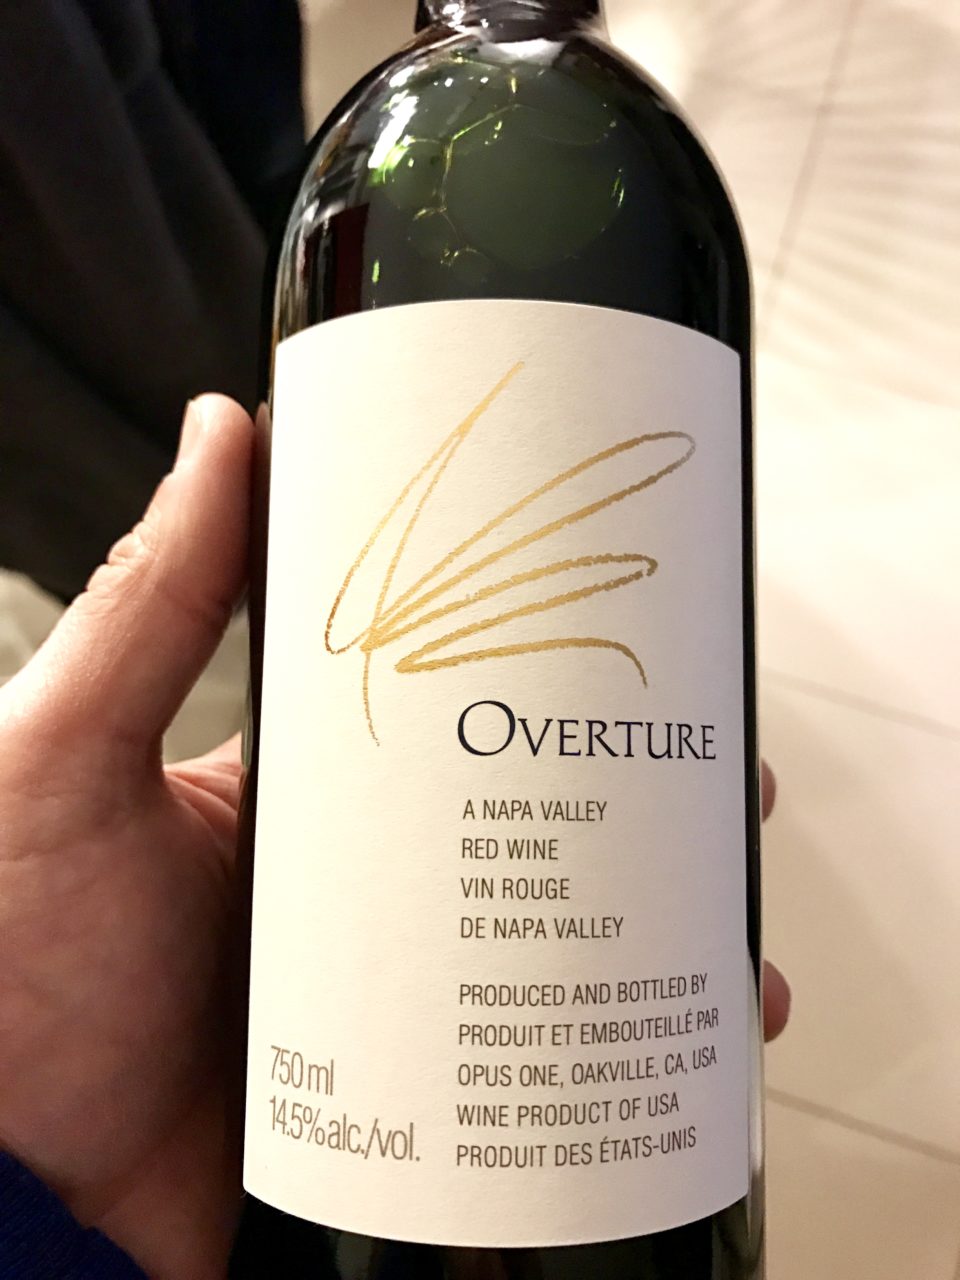 Opus oneセカンドワイン・オーバーチュアOverture